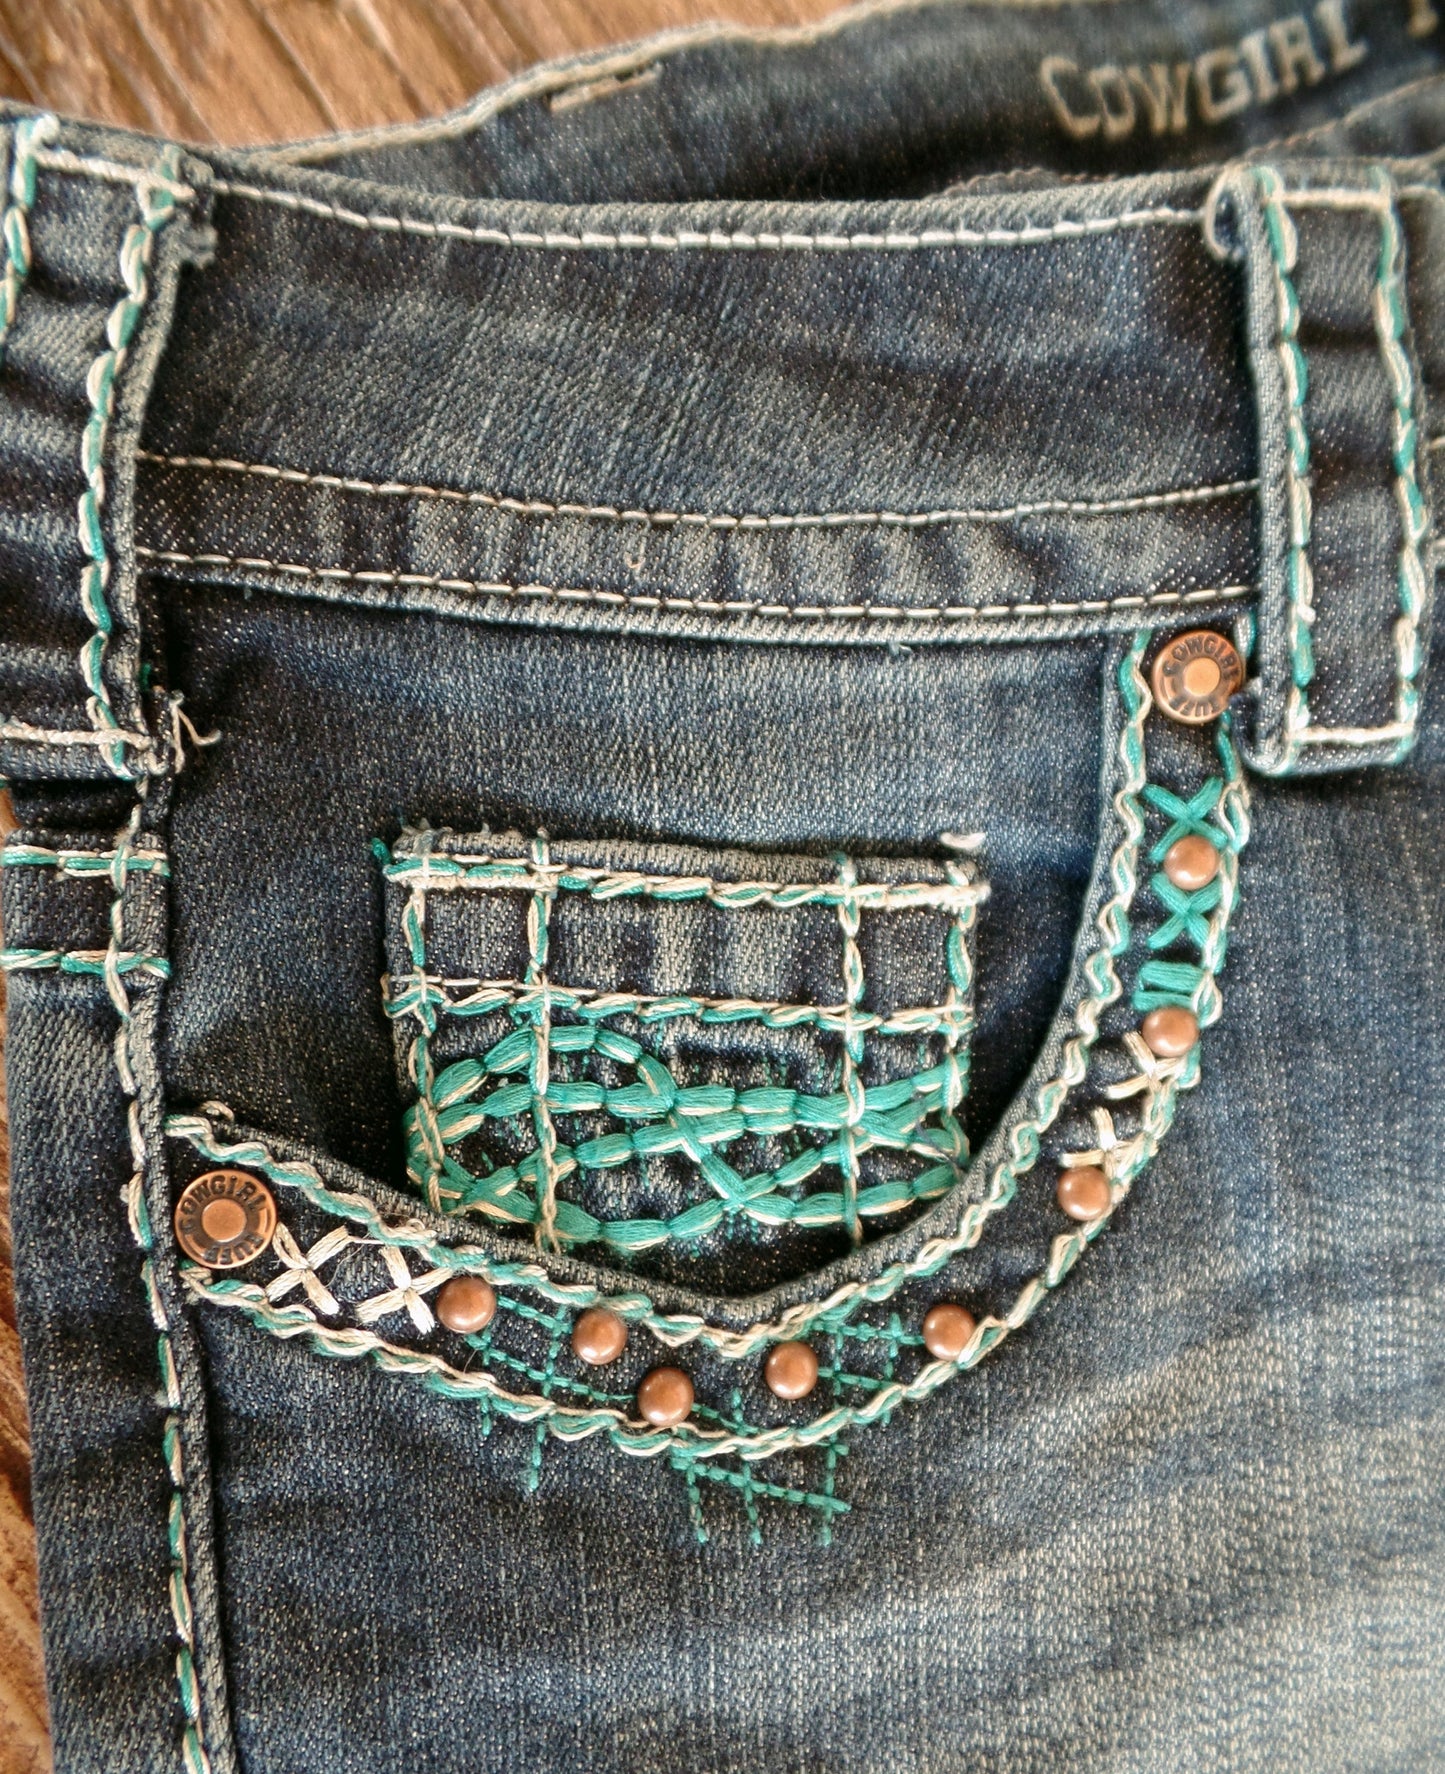 Cowgirl Tuff "Lasso" Boot Cut Jeans